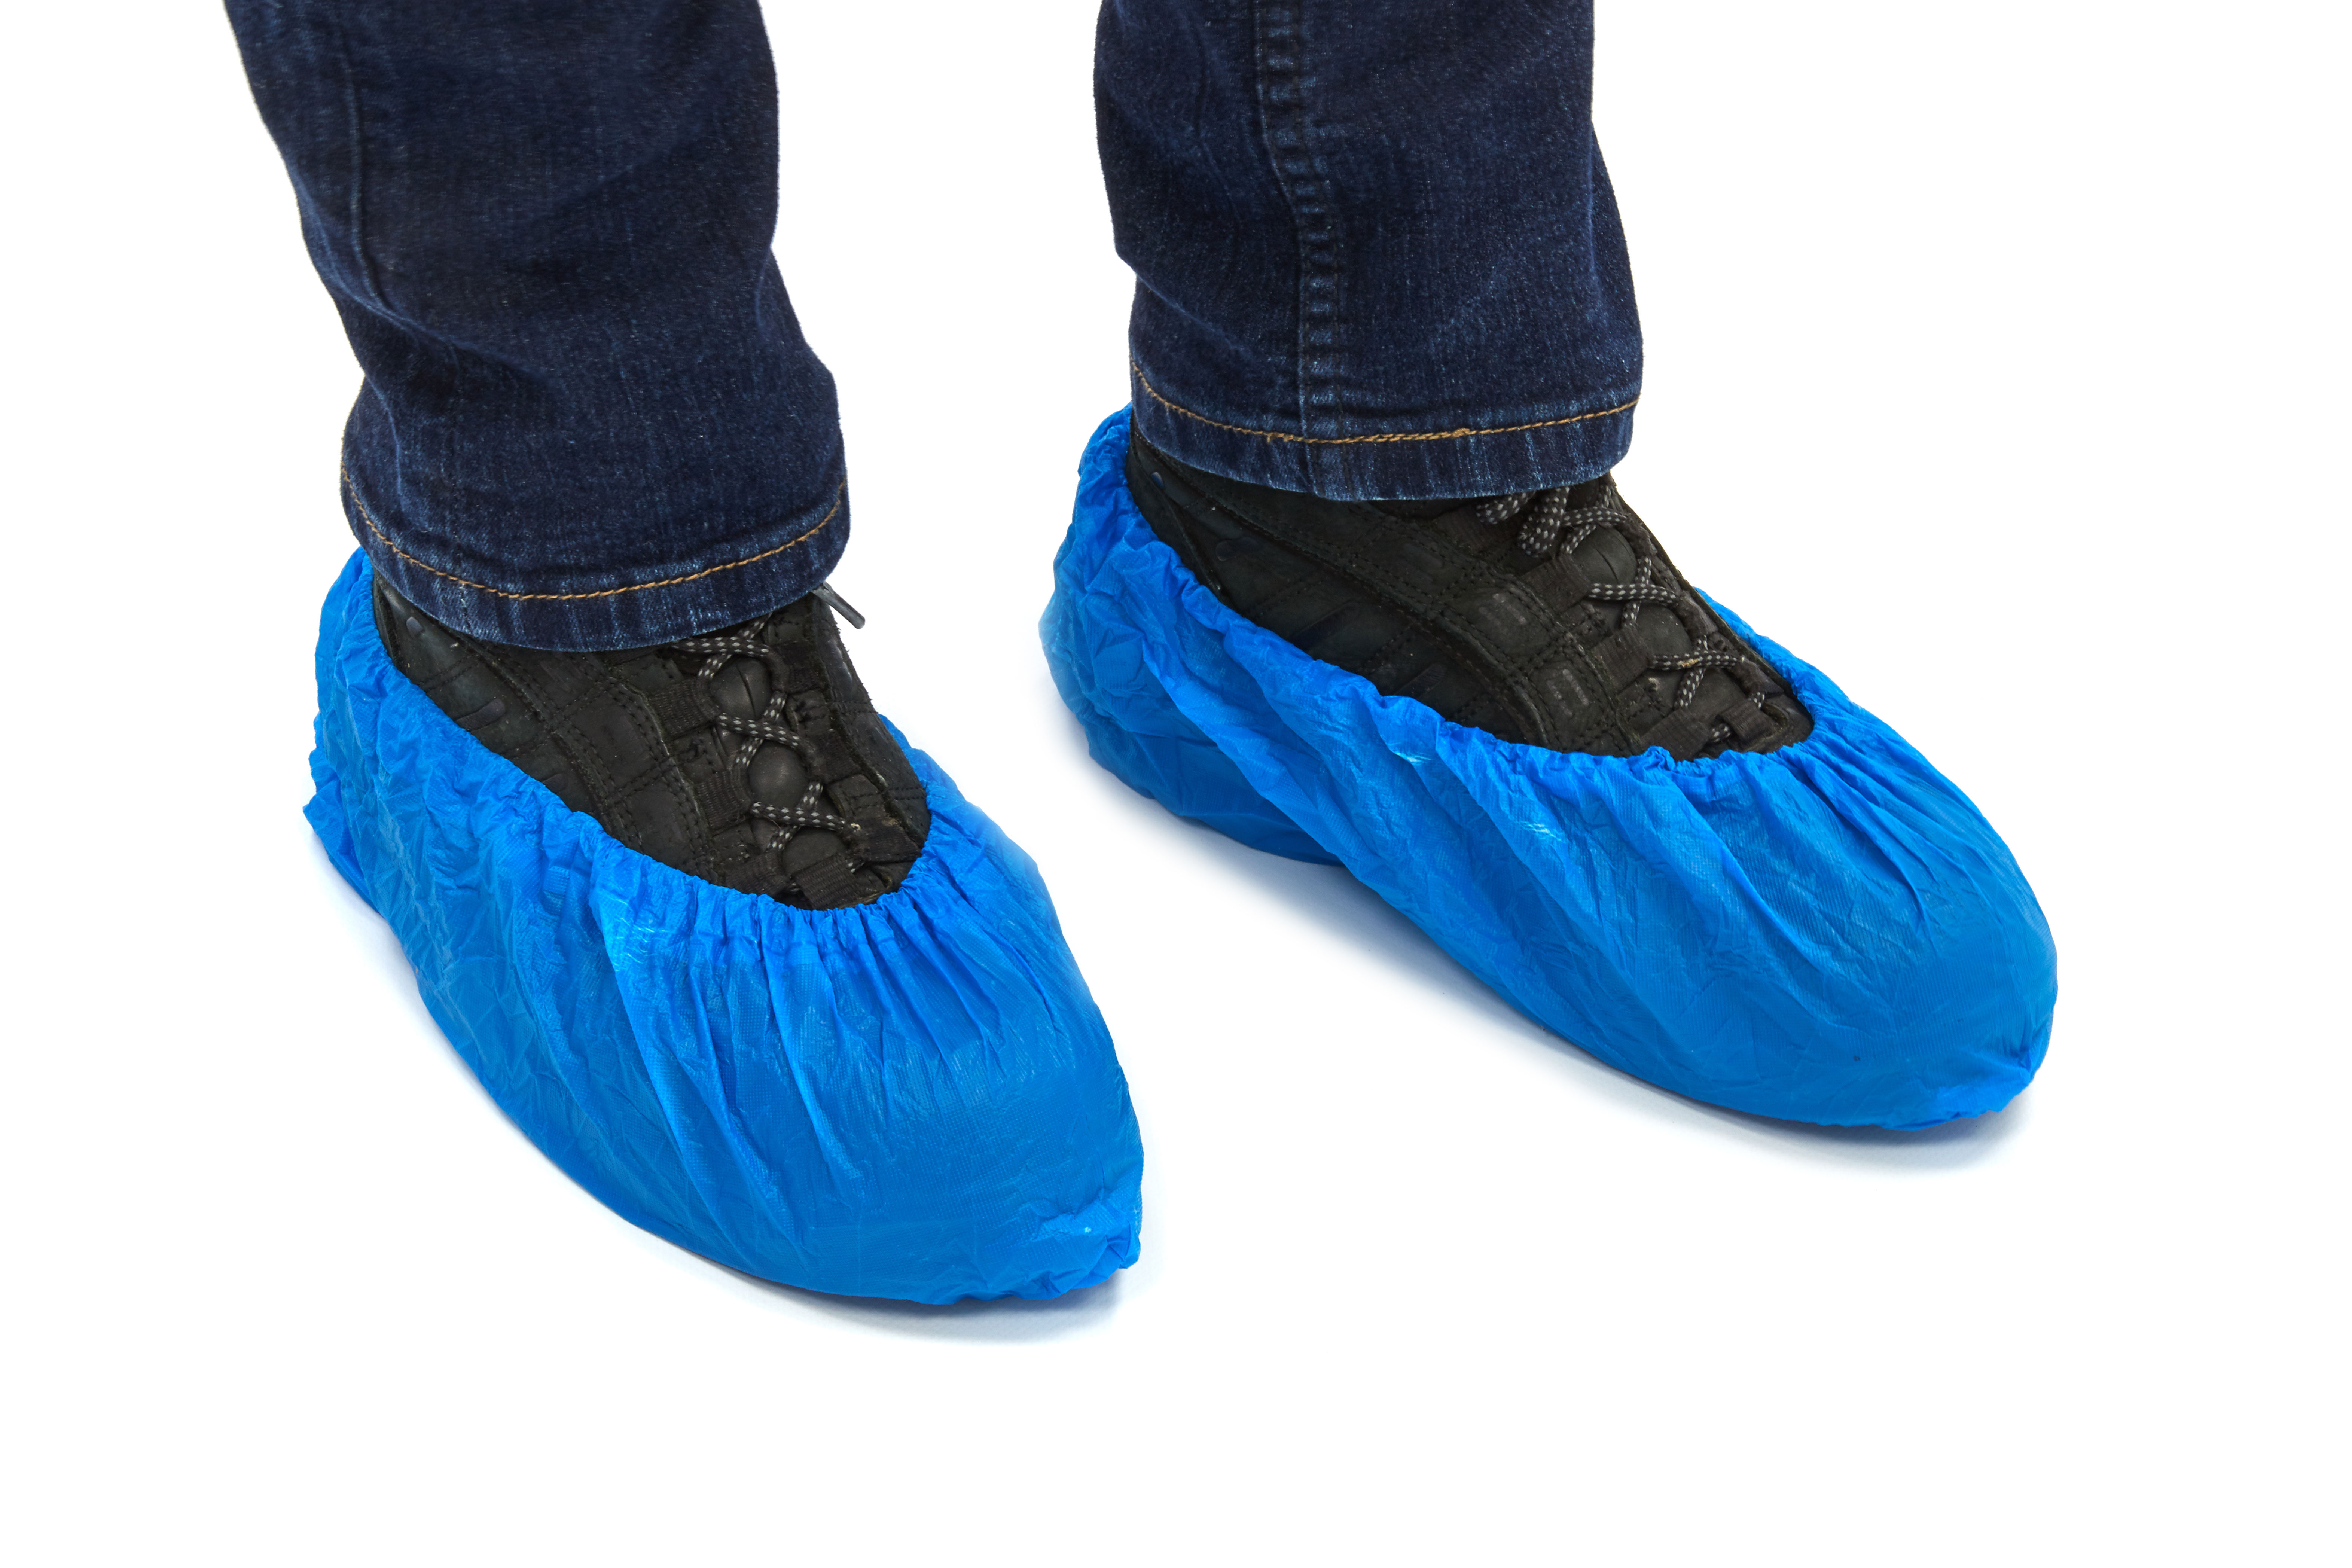 CPE Shoe Covers  Plastic Waterproof Lint-Free Shoe Covers